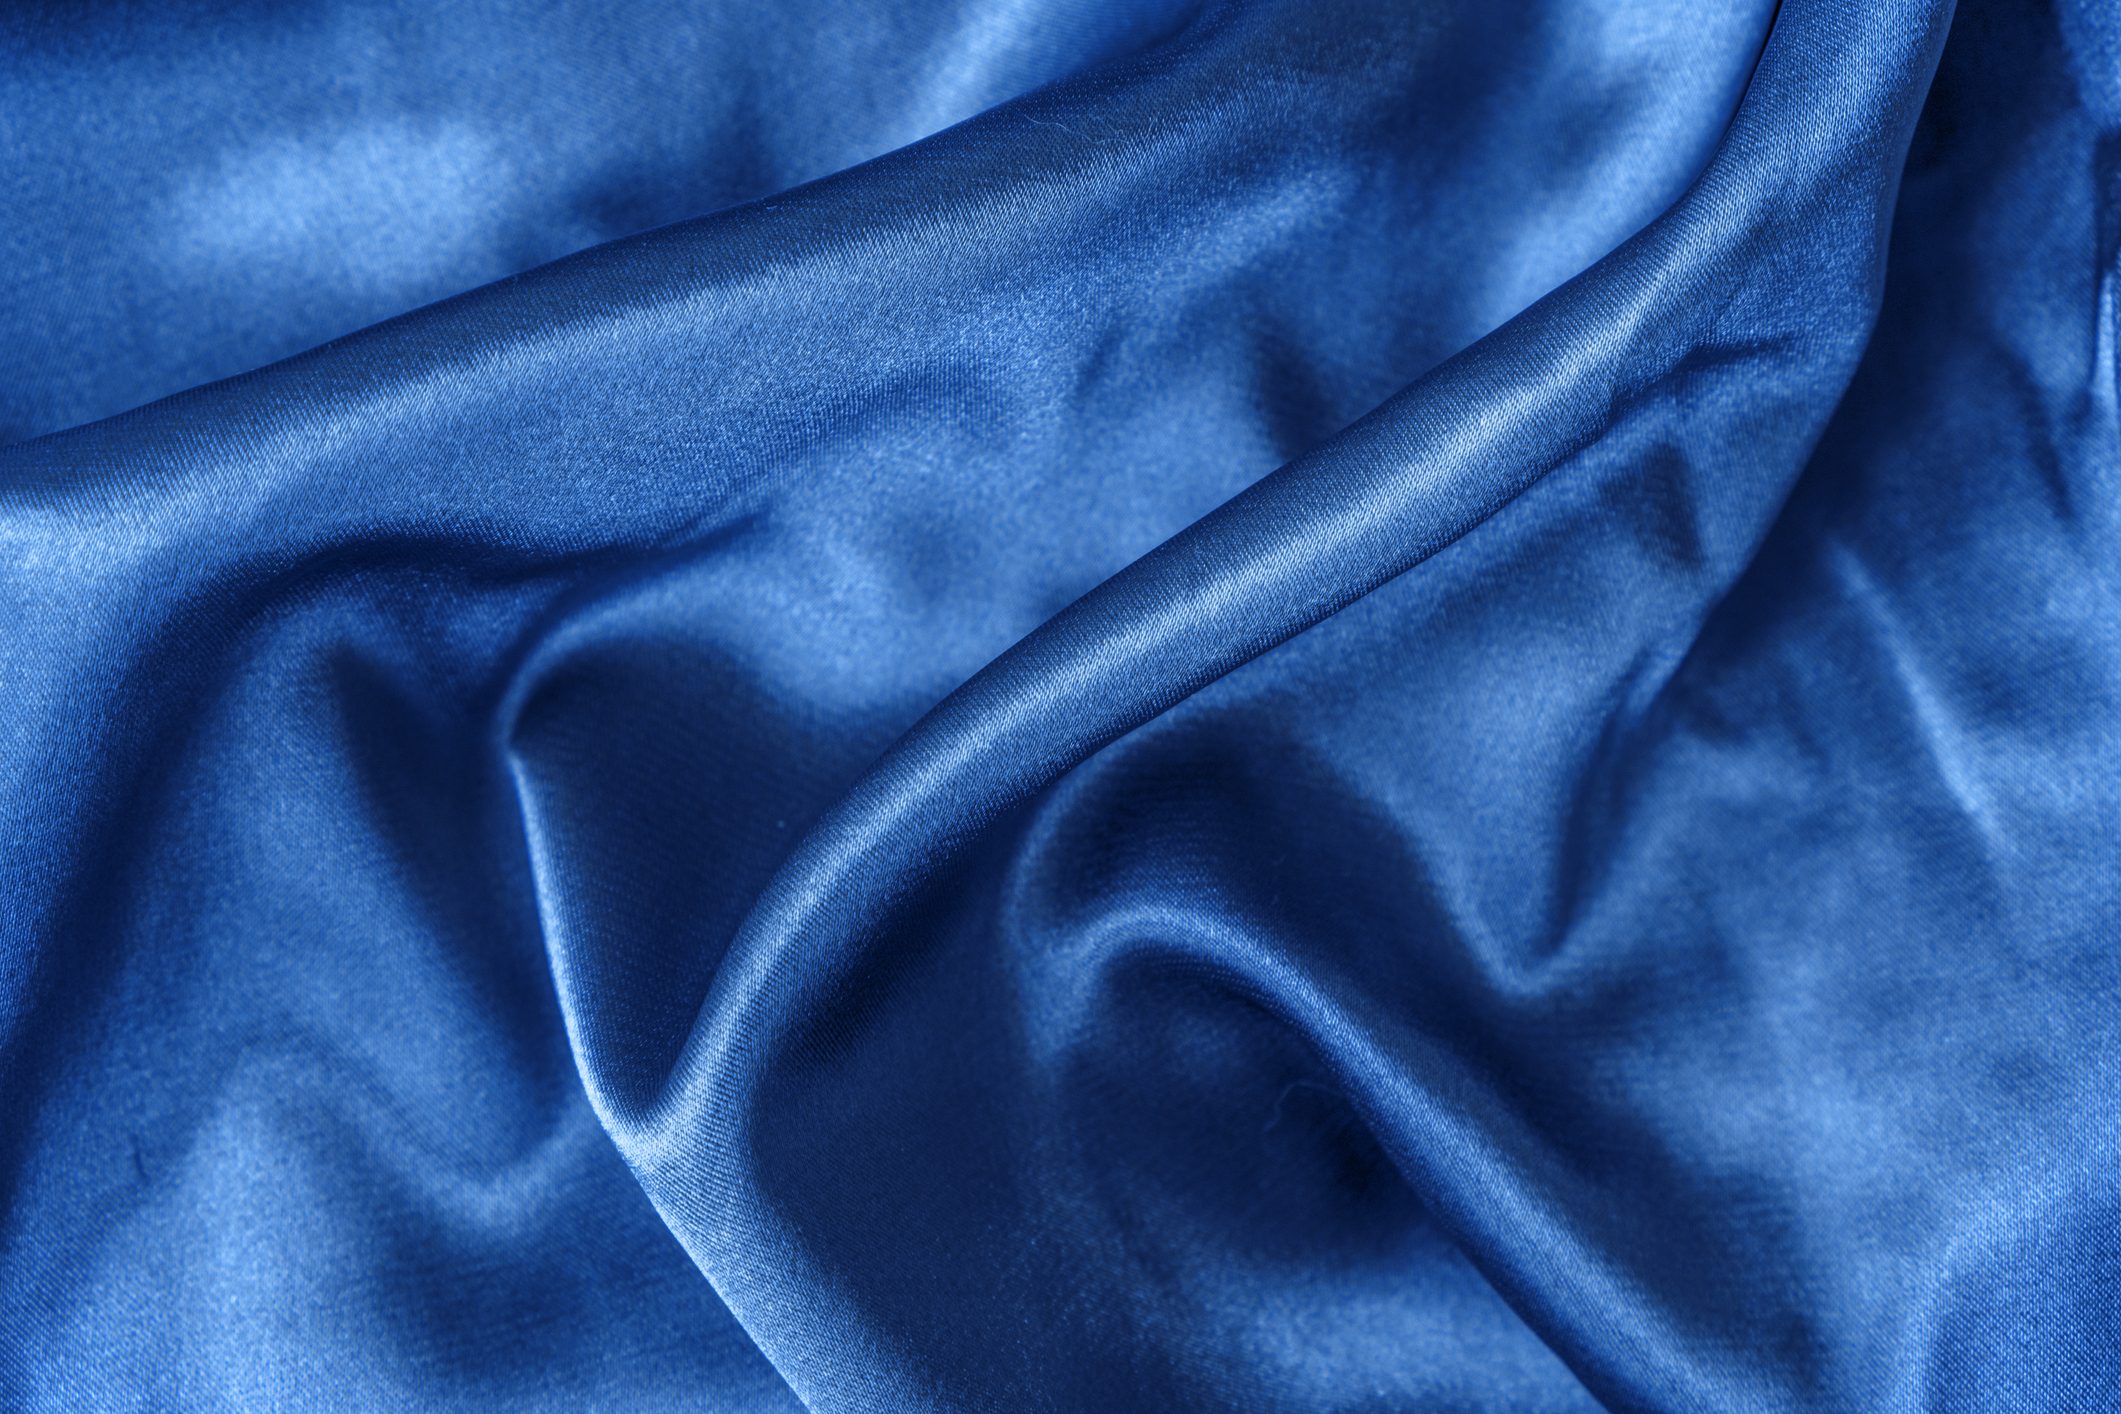 Elegant smooth blue silk or satin folds closeup Cloth texture